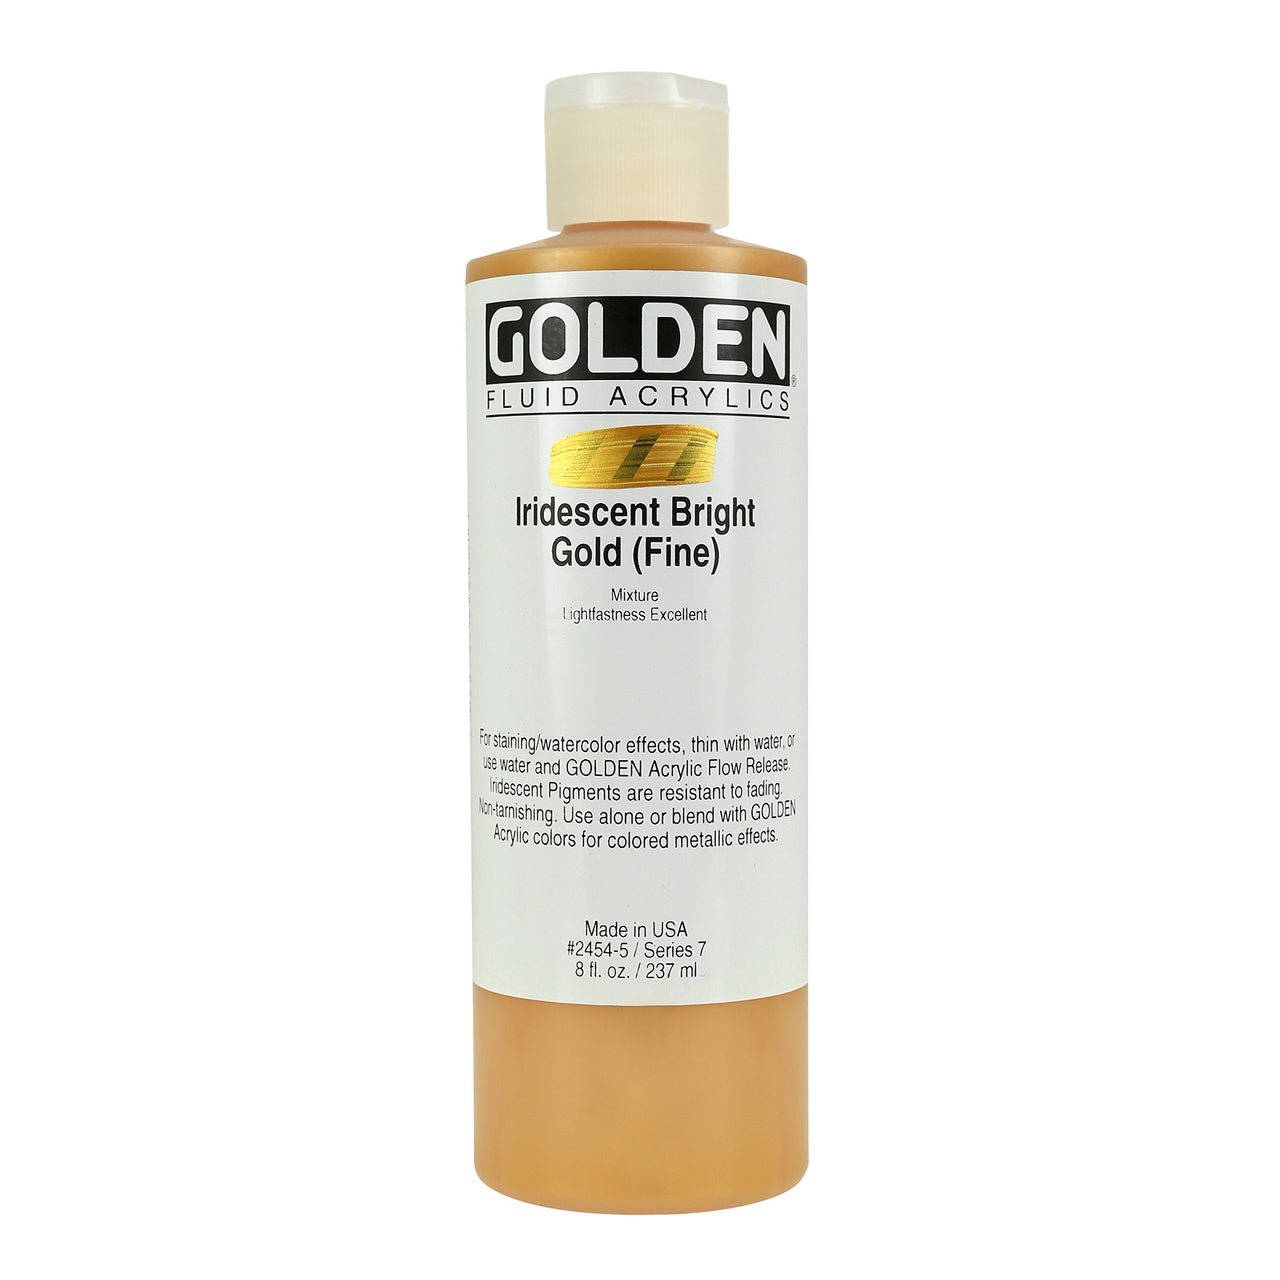 Golden Fluid Acrylic Iridescent Bright Gold (fine) 8 oz - merriartist.com